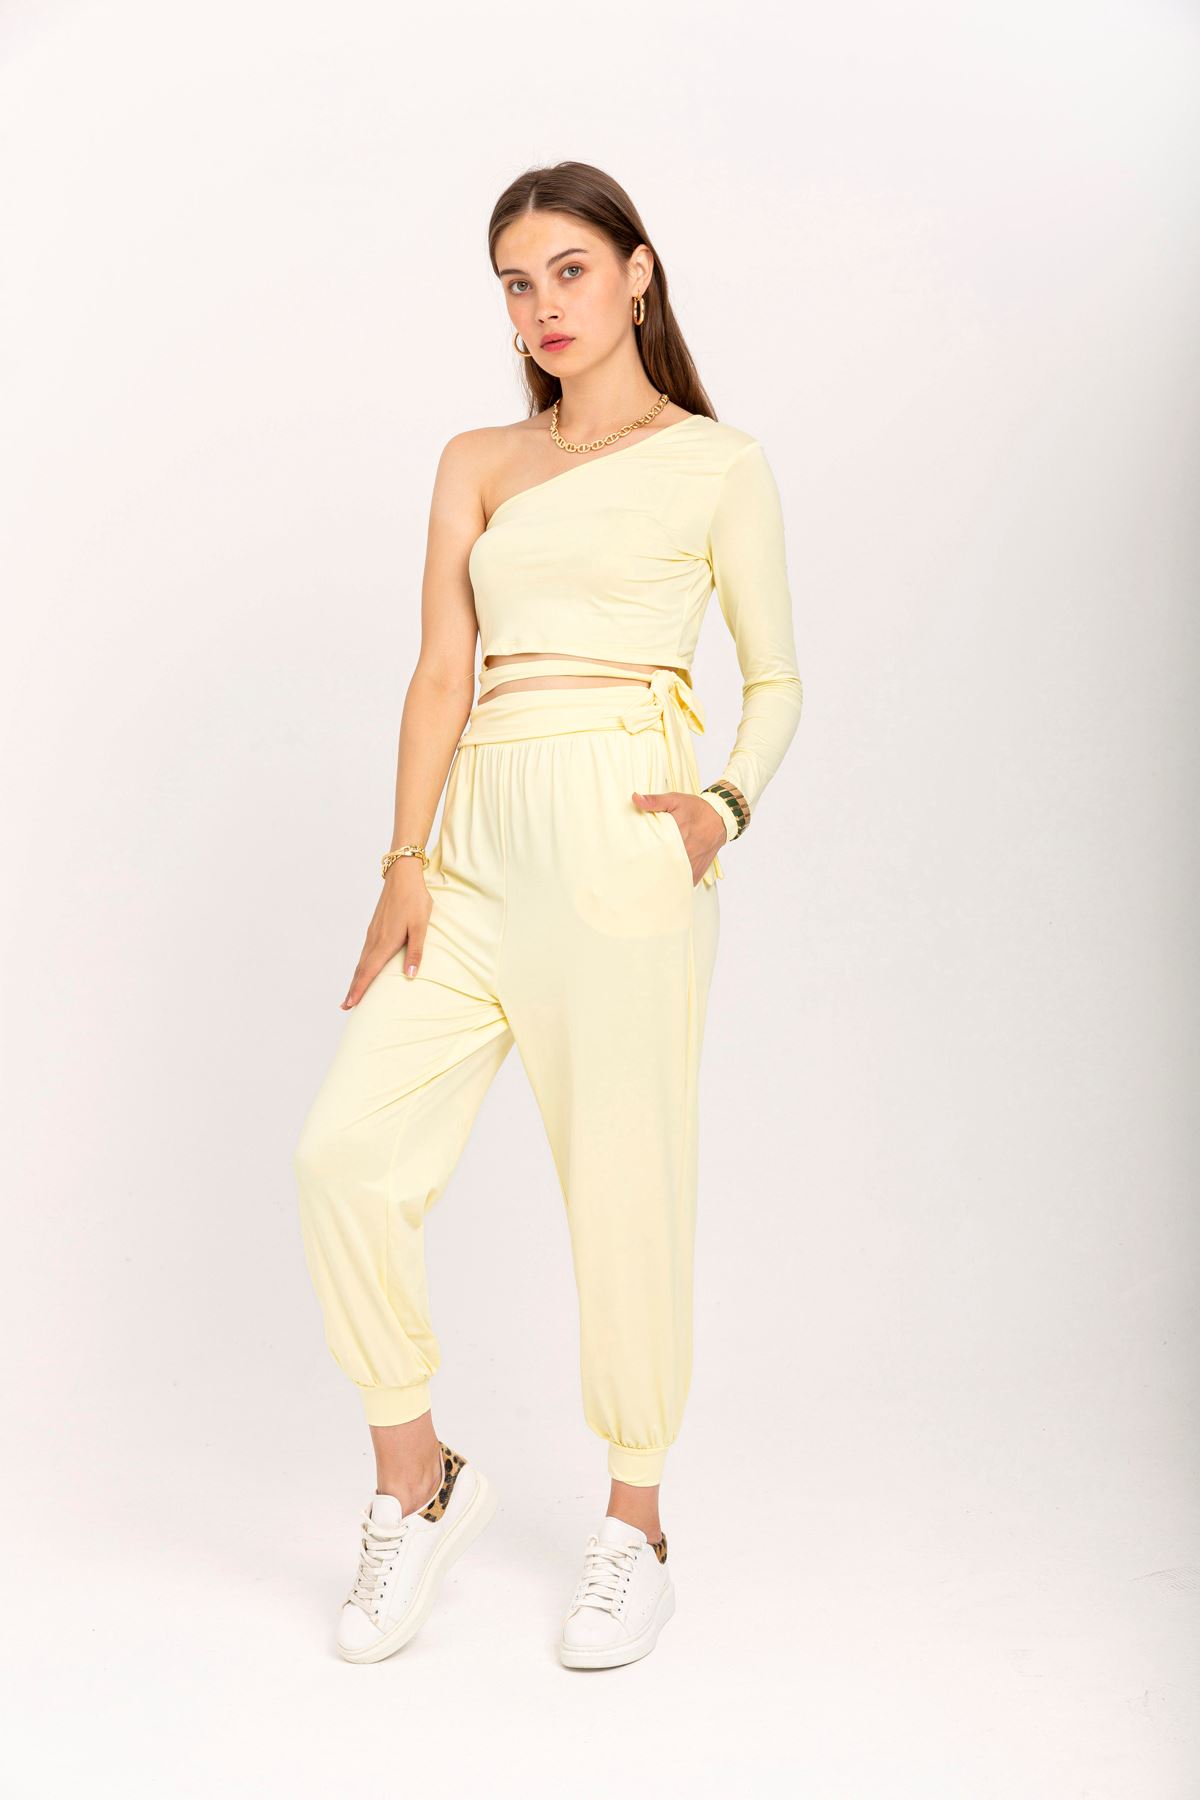 Scuba Fabric Tight Fit Asymmetrical Women'S Set 2 Pieces - Yellow